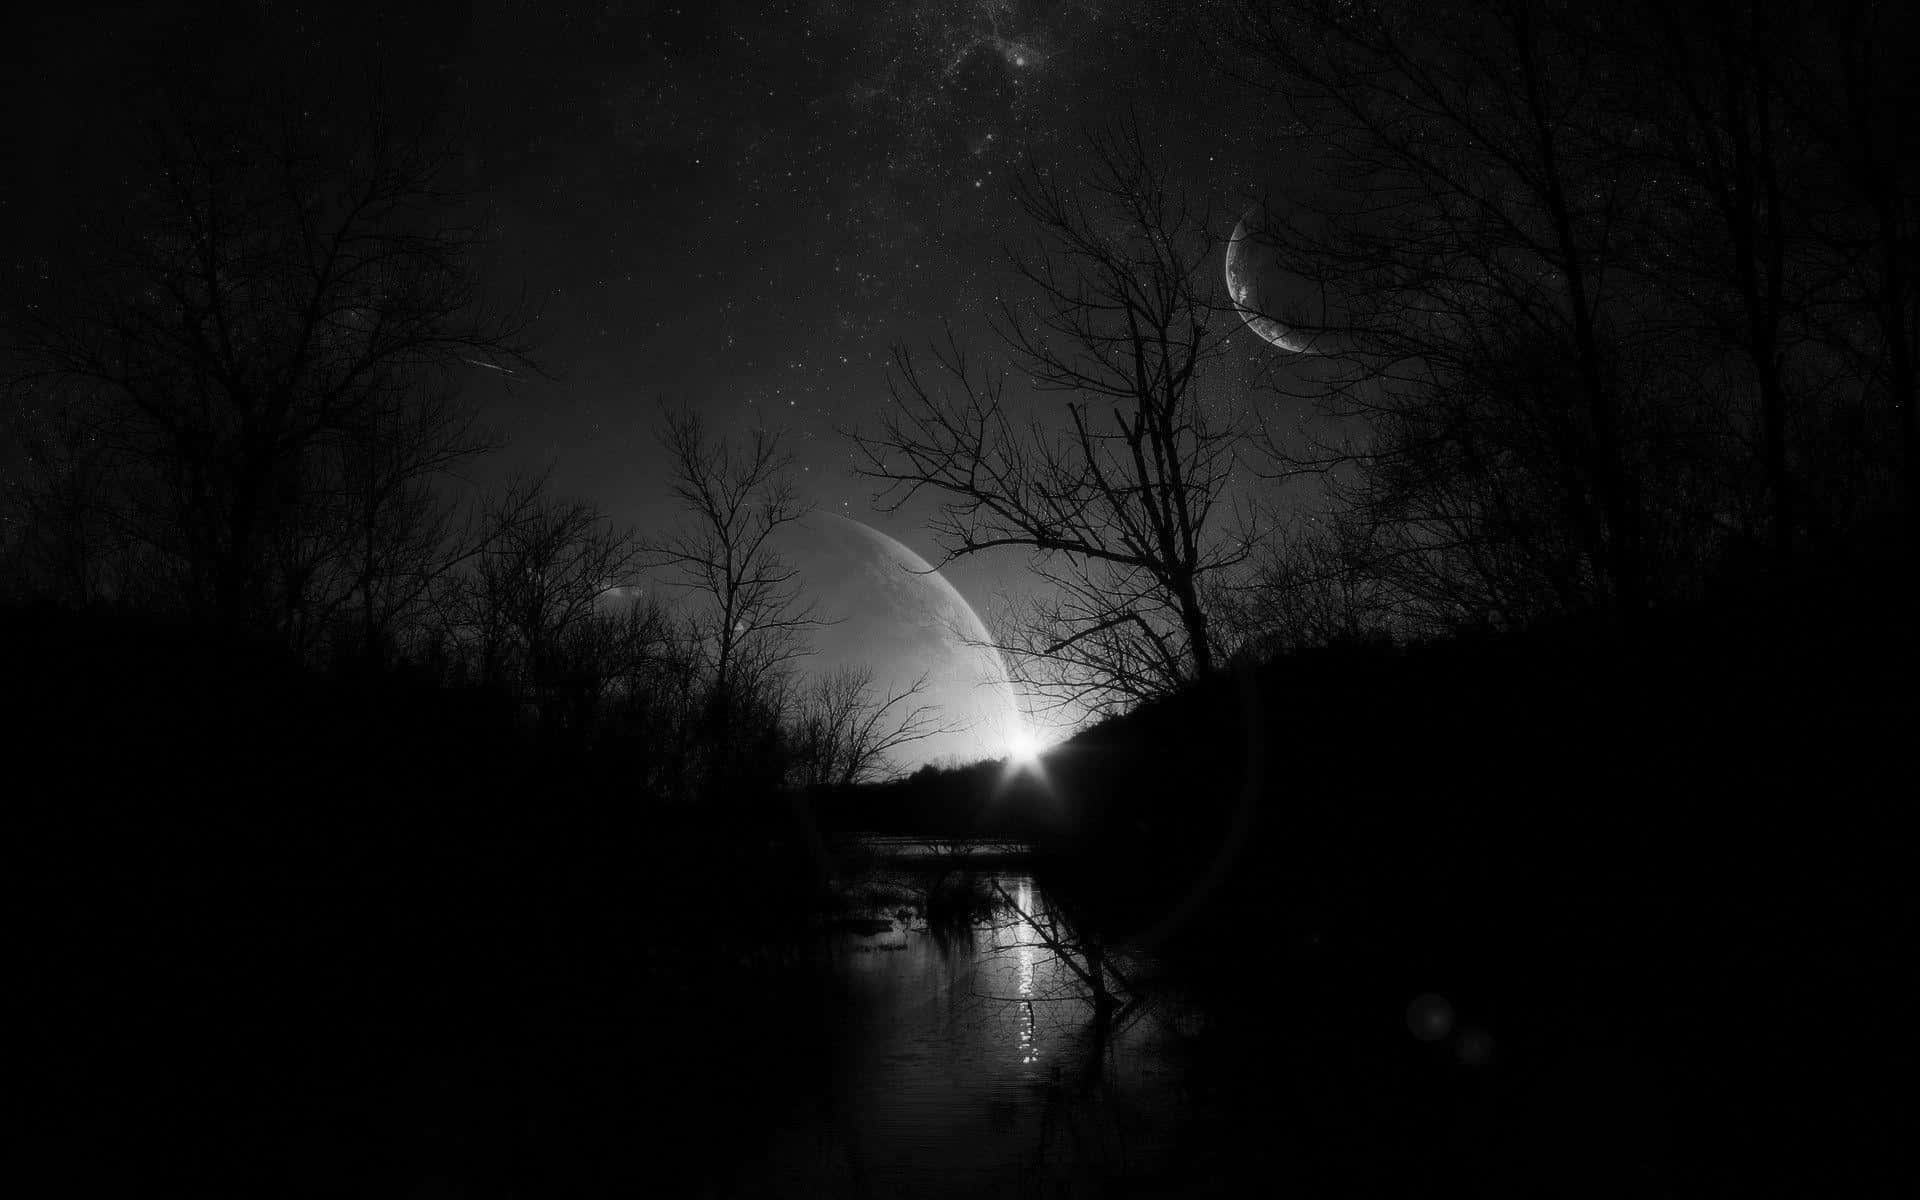 Imagemdo Lago Escuro E Lua.